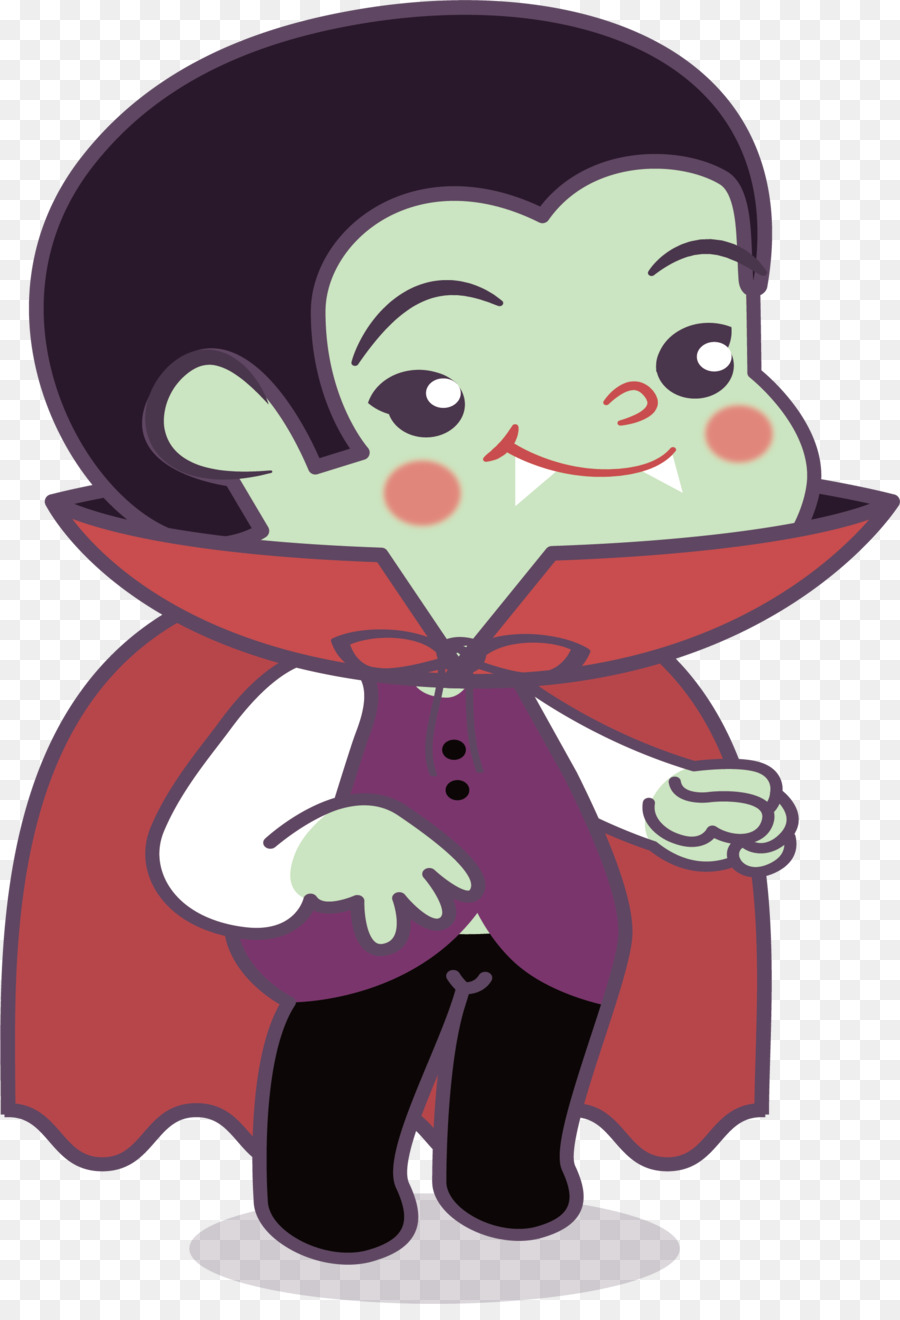 Vampire Clip art - Cartoon Vampire png download - 1854*2686 - Free Transparent  png Download.